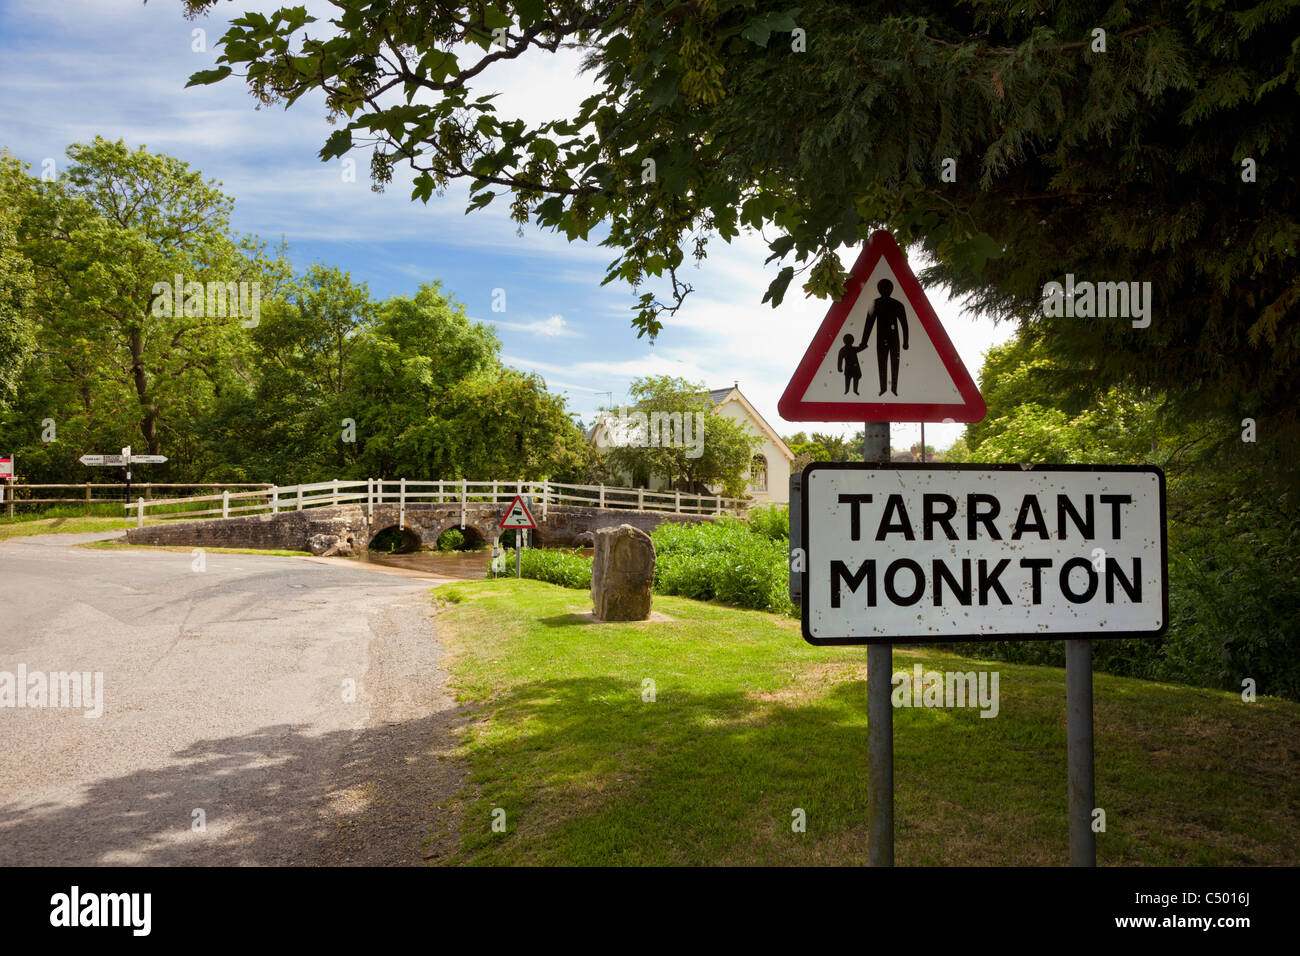 Tarrant Monkton village sign and ford, Dorset, England, UK Stock Photo